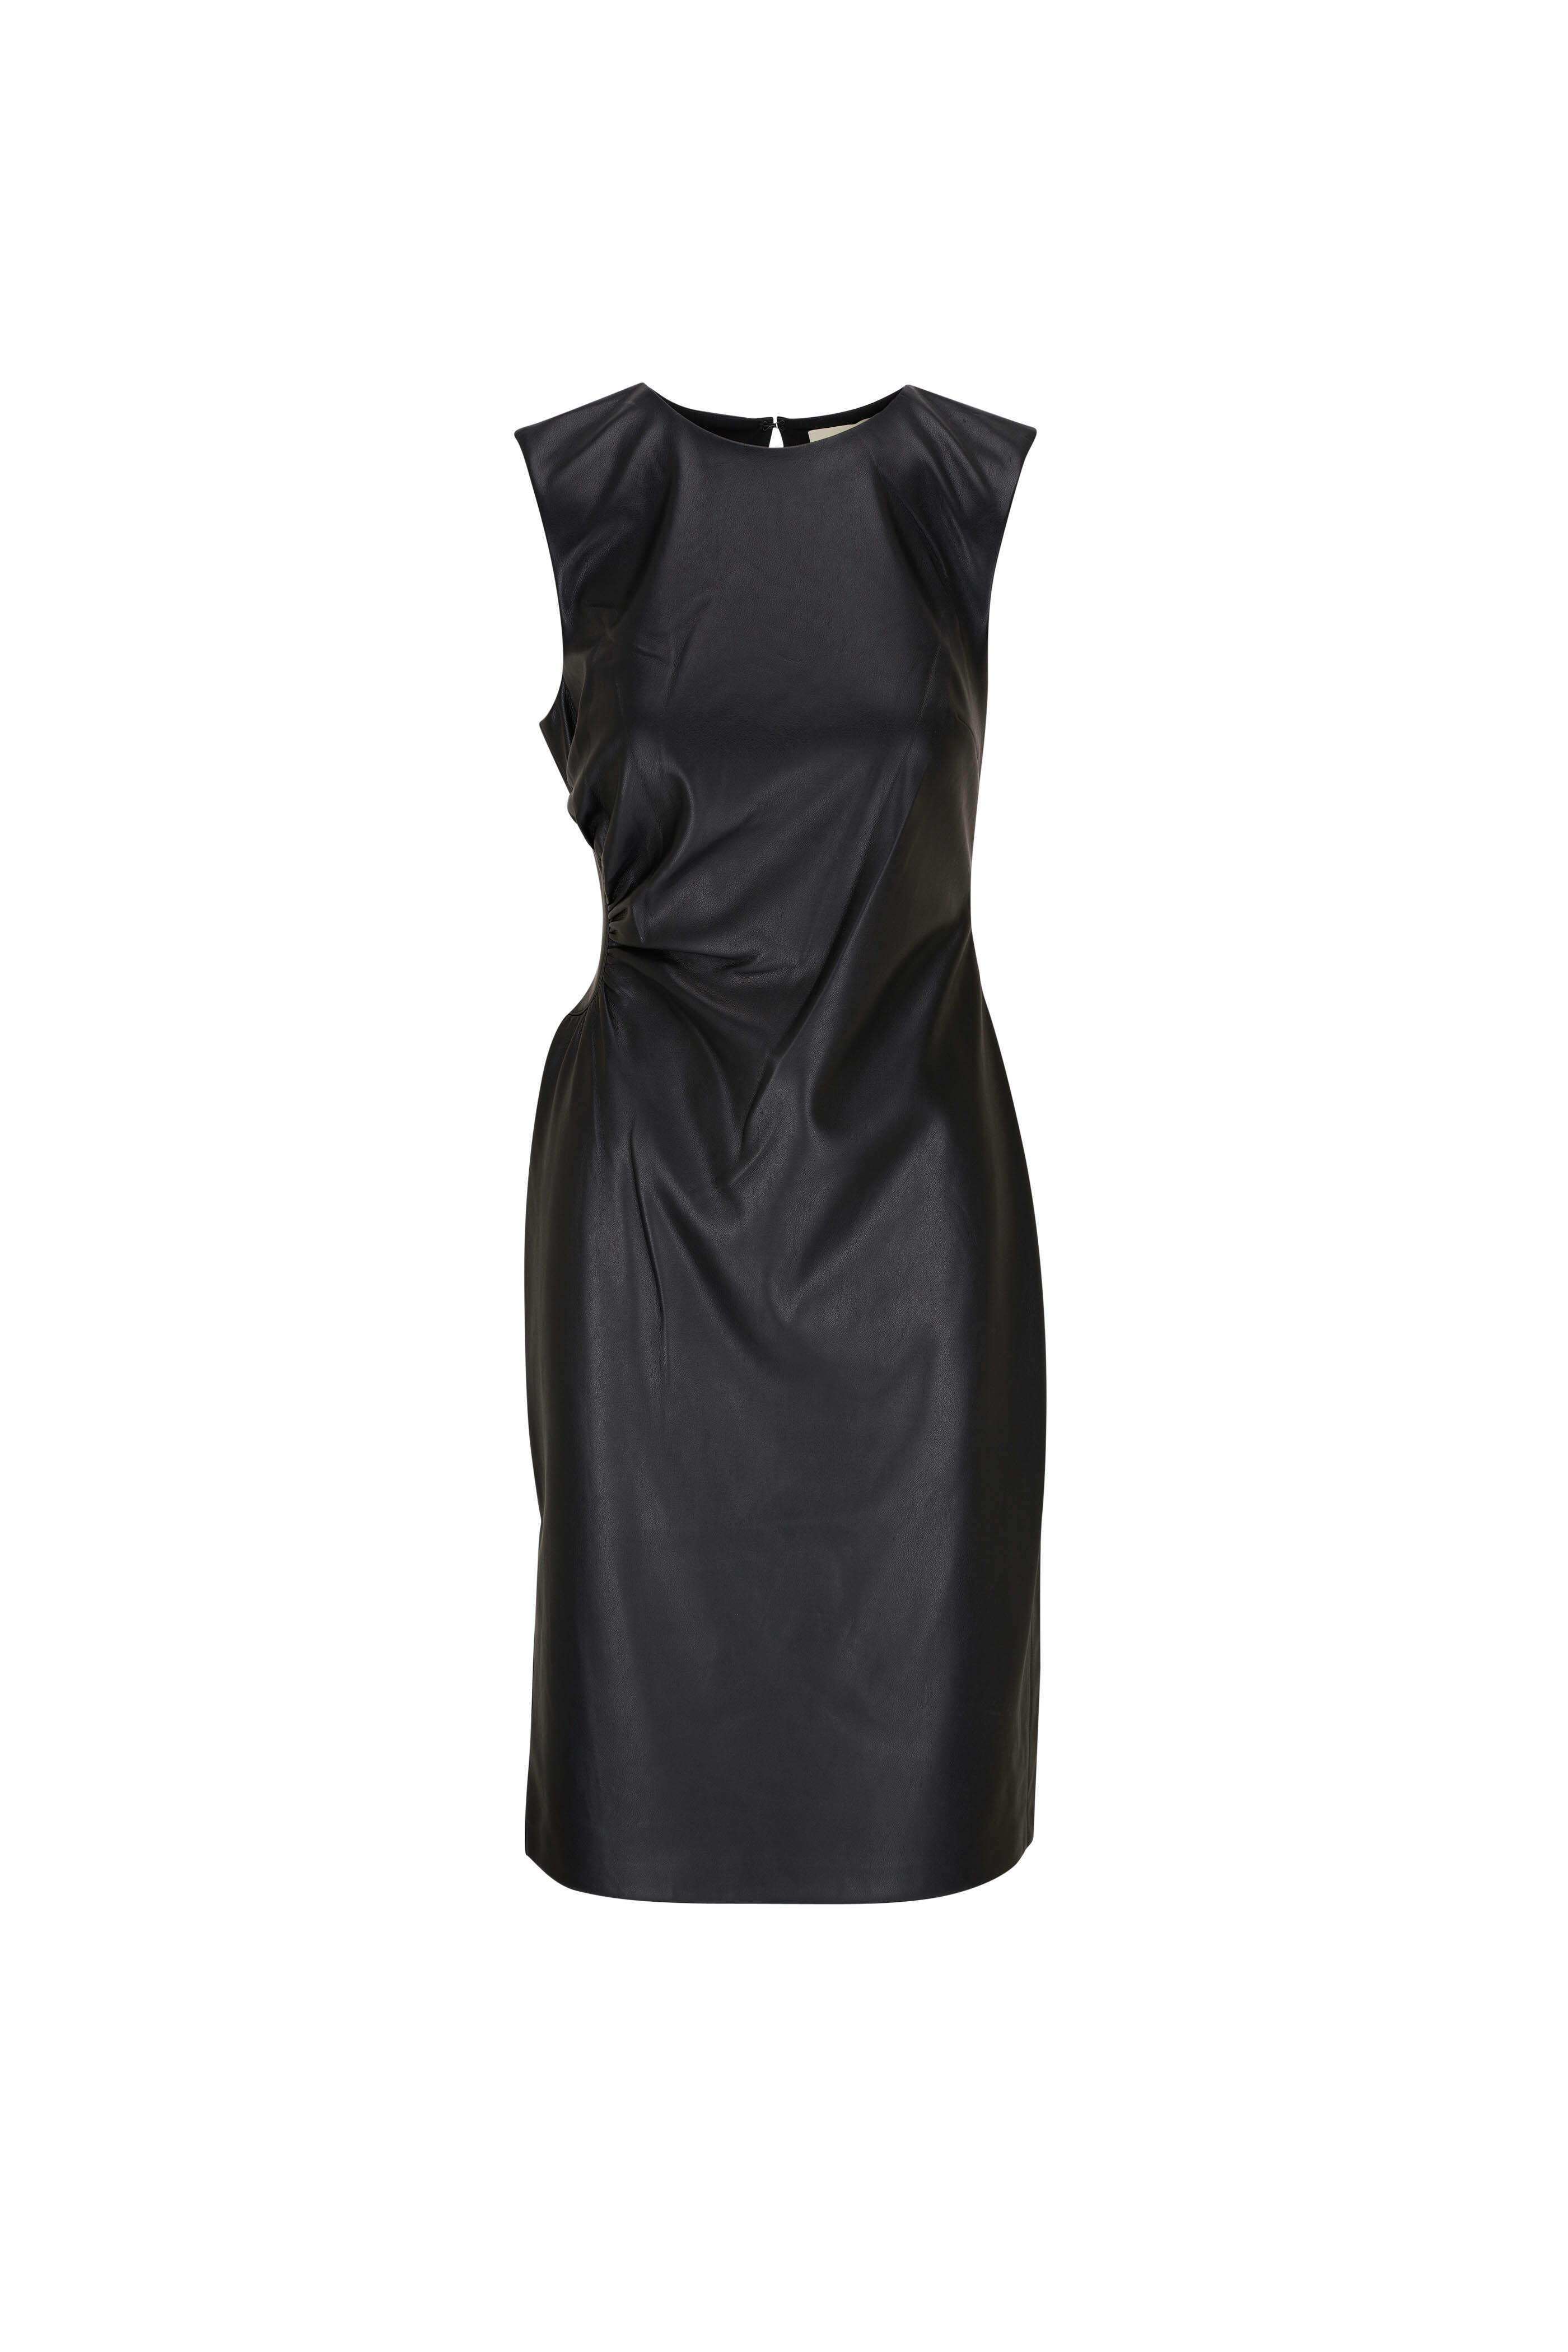 Sachin + Babi - Diana Black Faux Leather Dress | Mitchell Stores